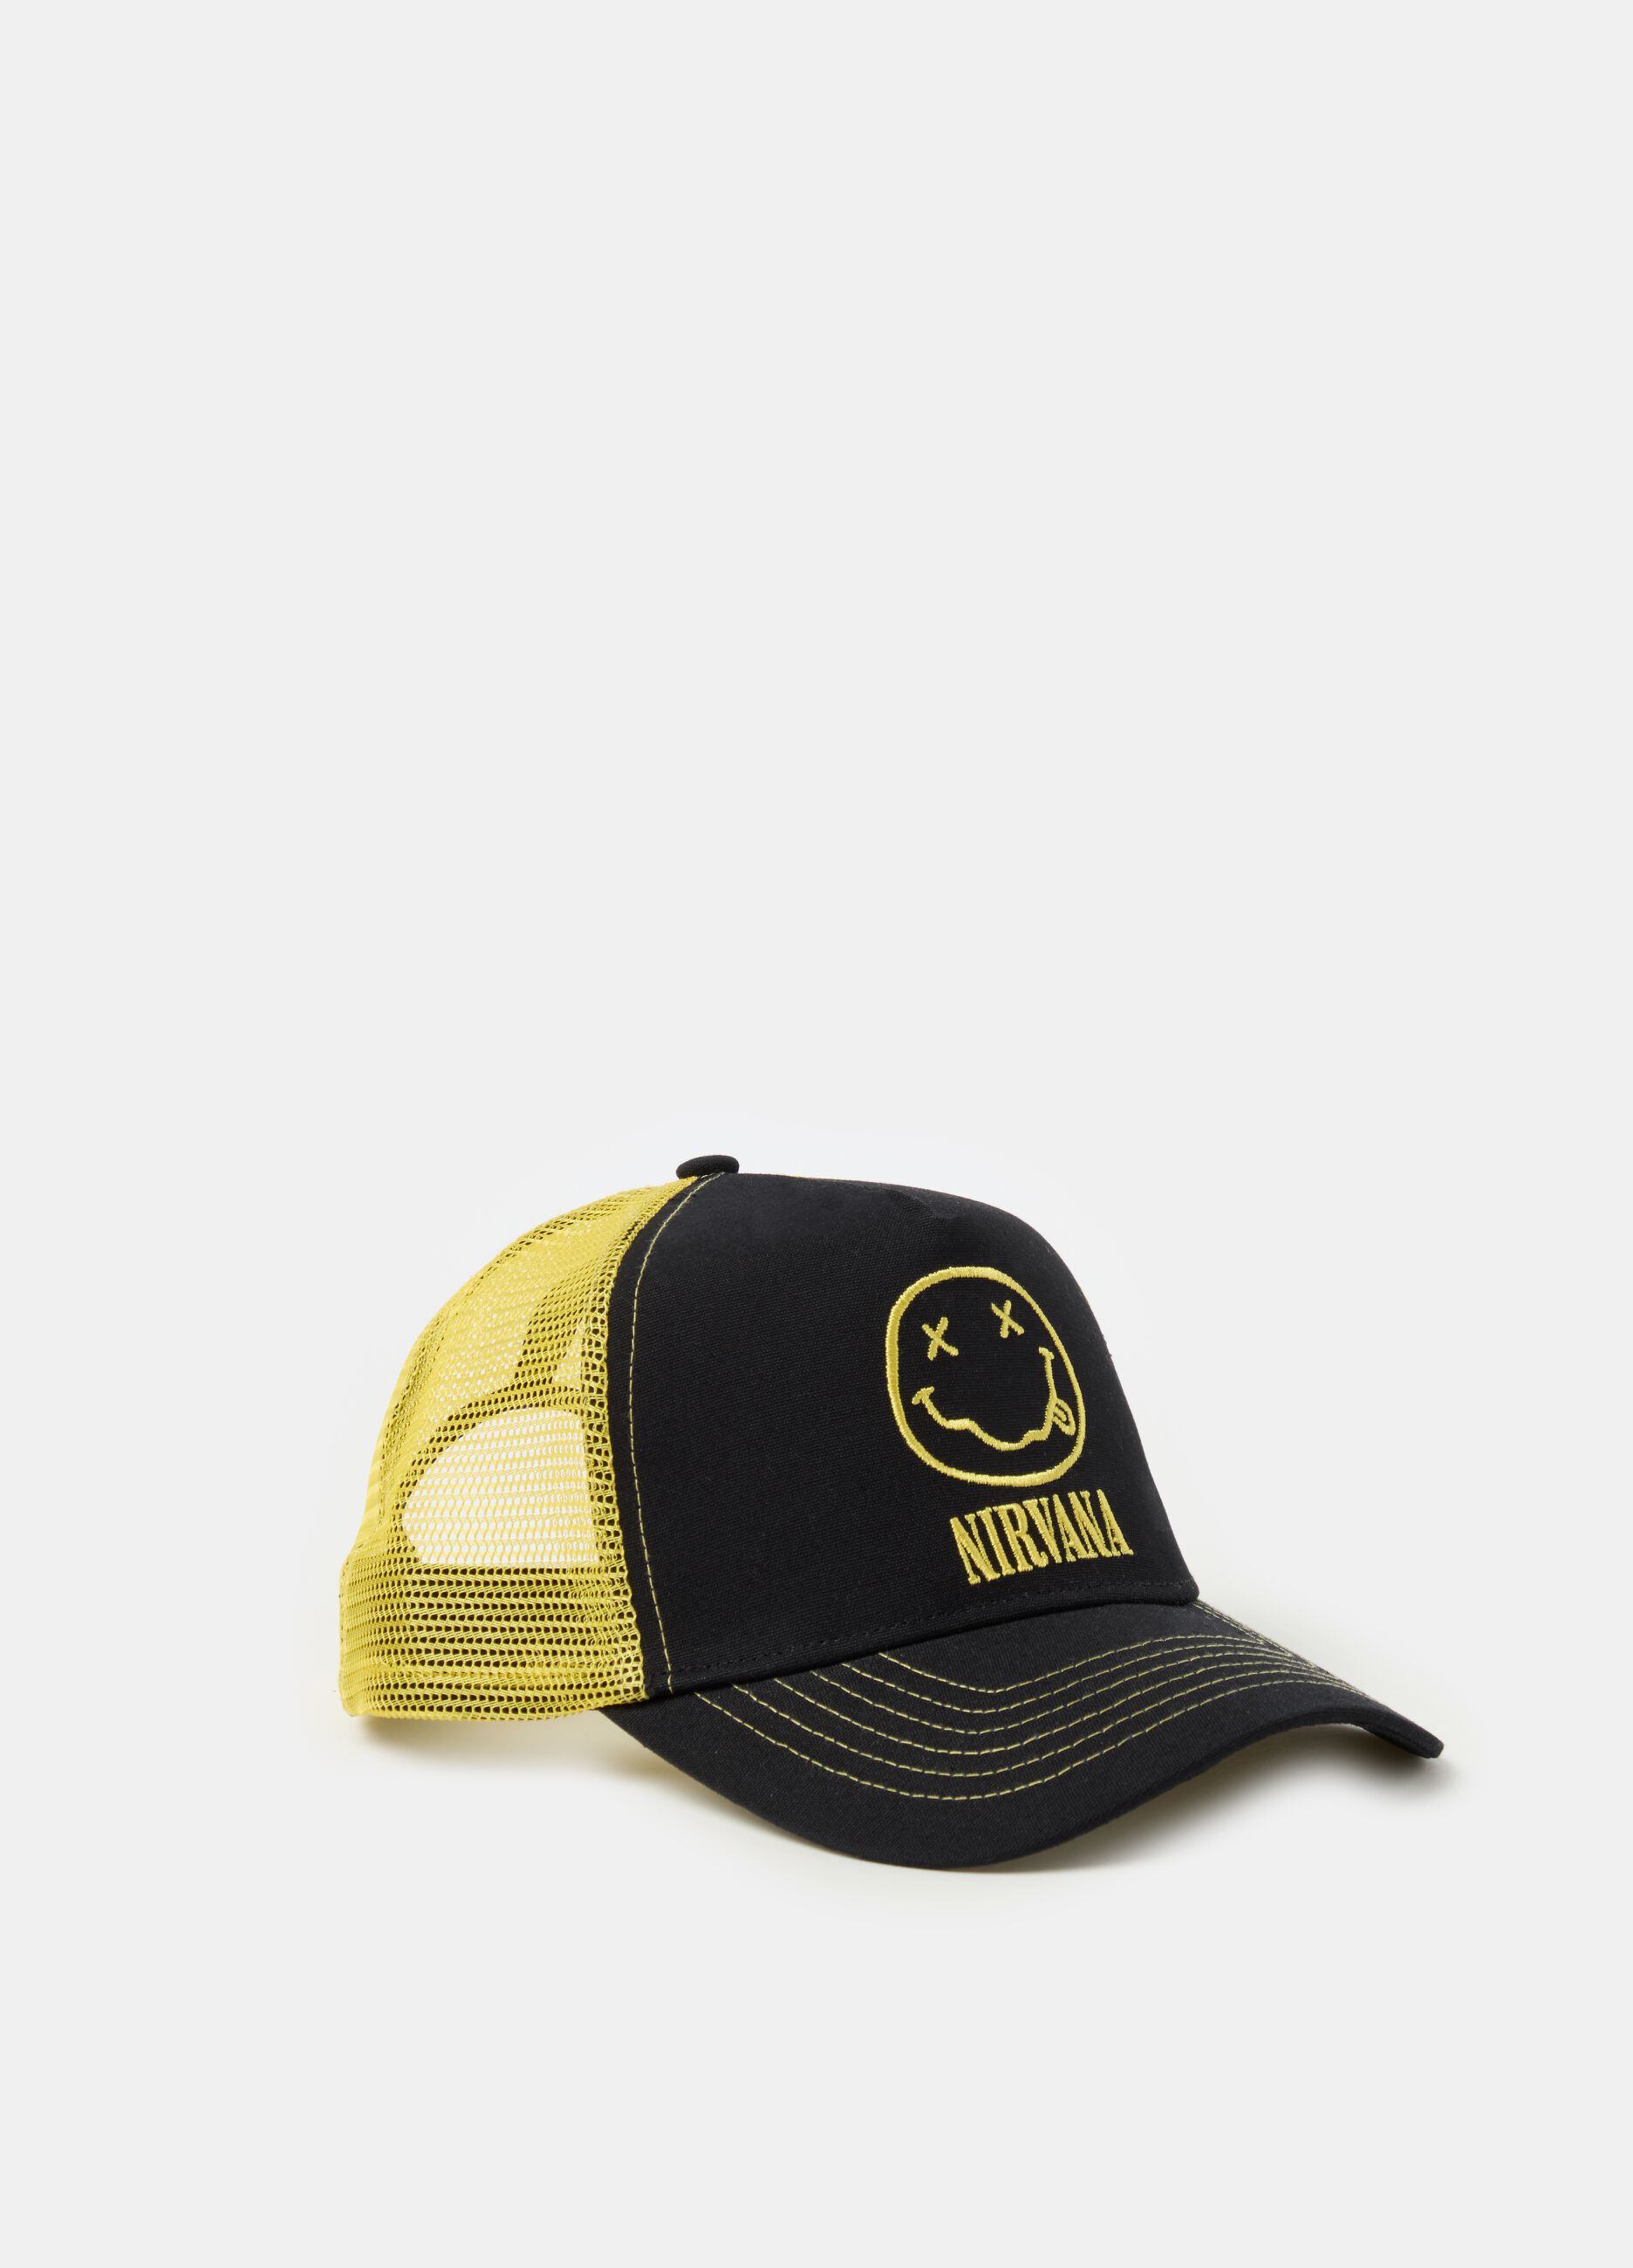 Baseball cap with Nirvana embroidery